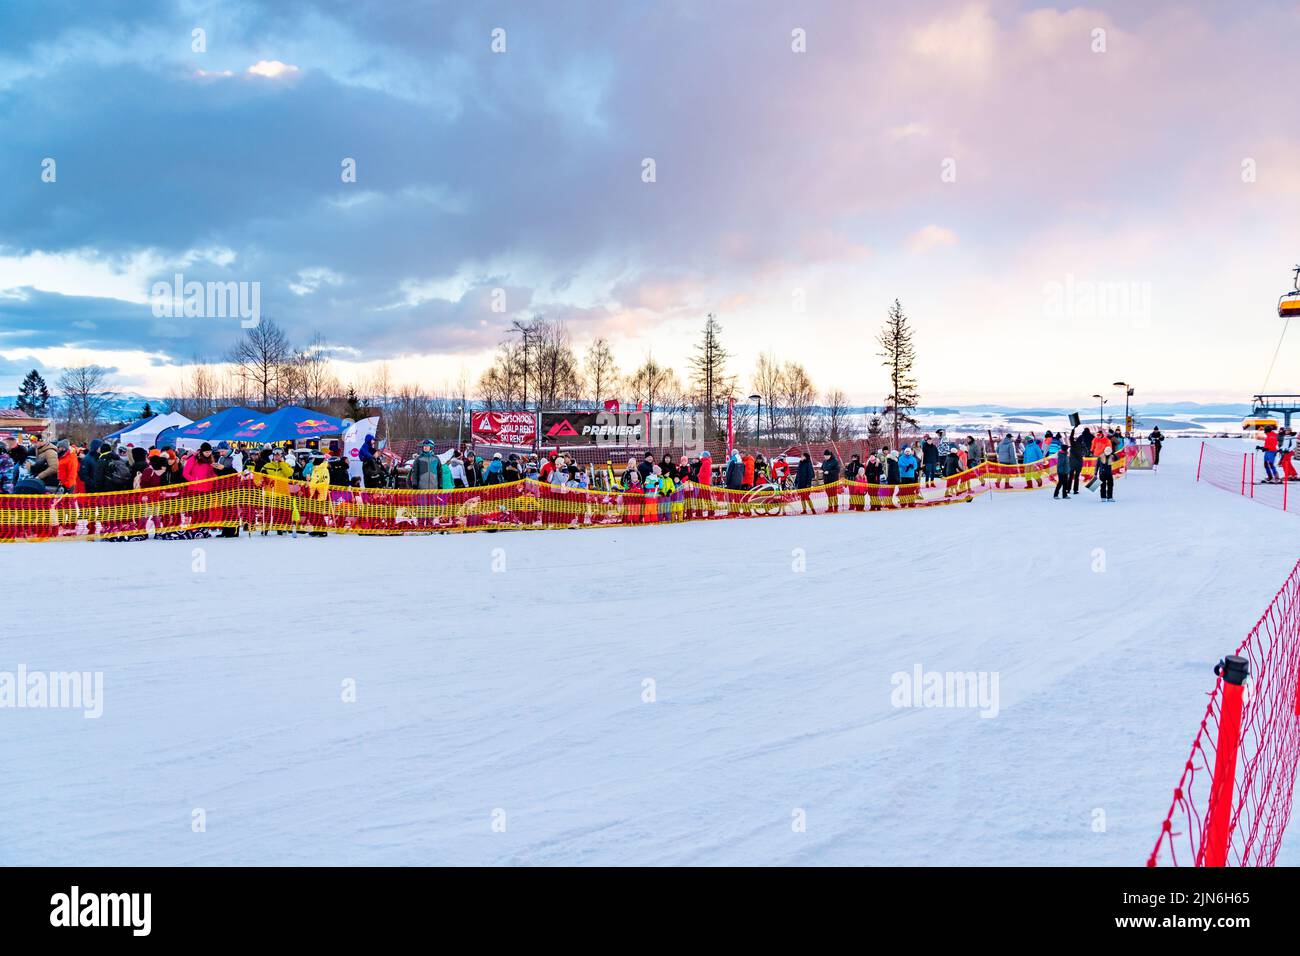 Tatranska Lomnica, Slowakei - 4,2.2022: Der Ski- und Snowboardwettbewerb "Zjazd Nadoraz" in der Hohen Tatra, Slowakei - Stadt Tatranska Lomnica. Wi Stockfoto